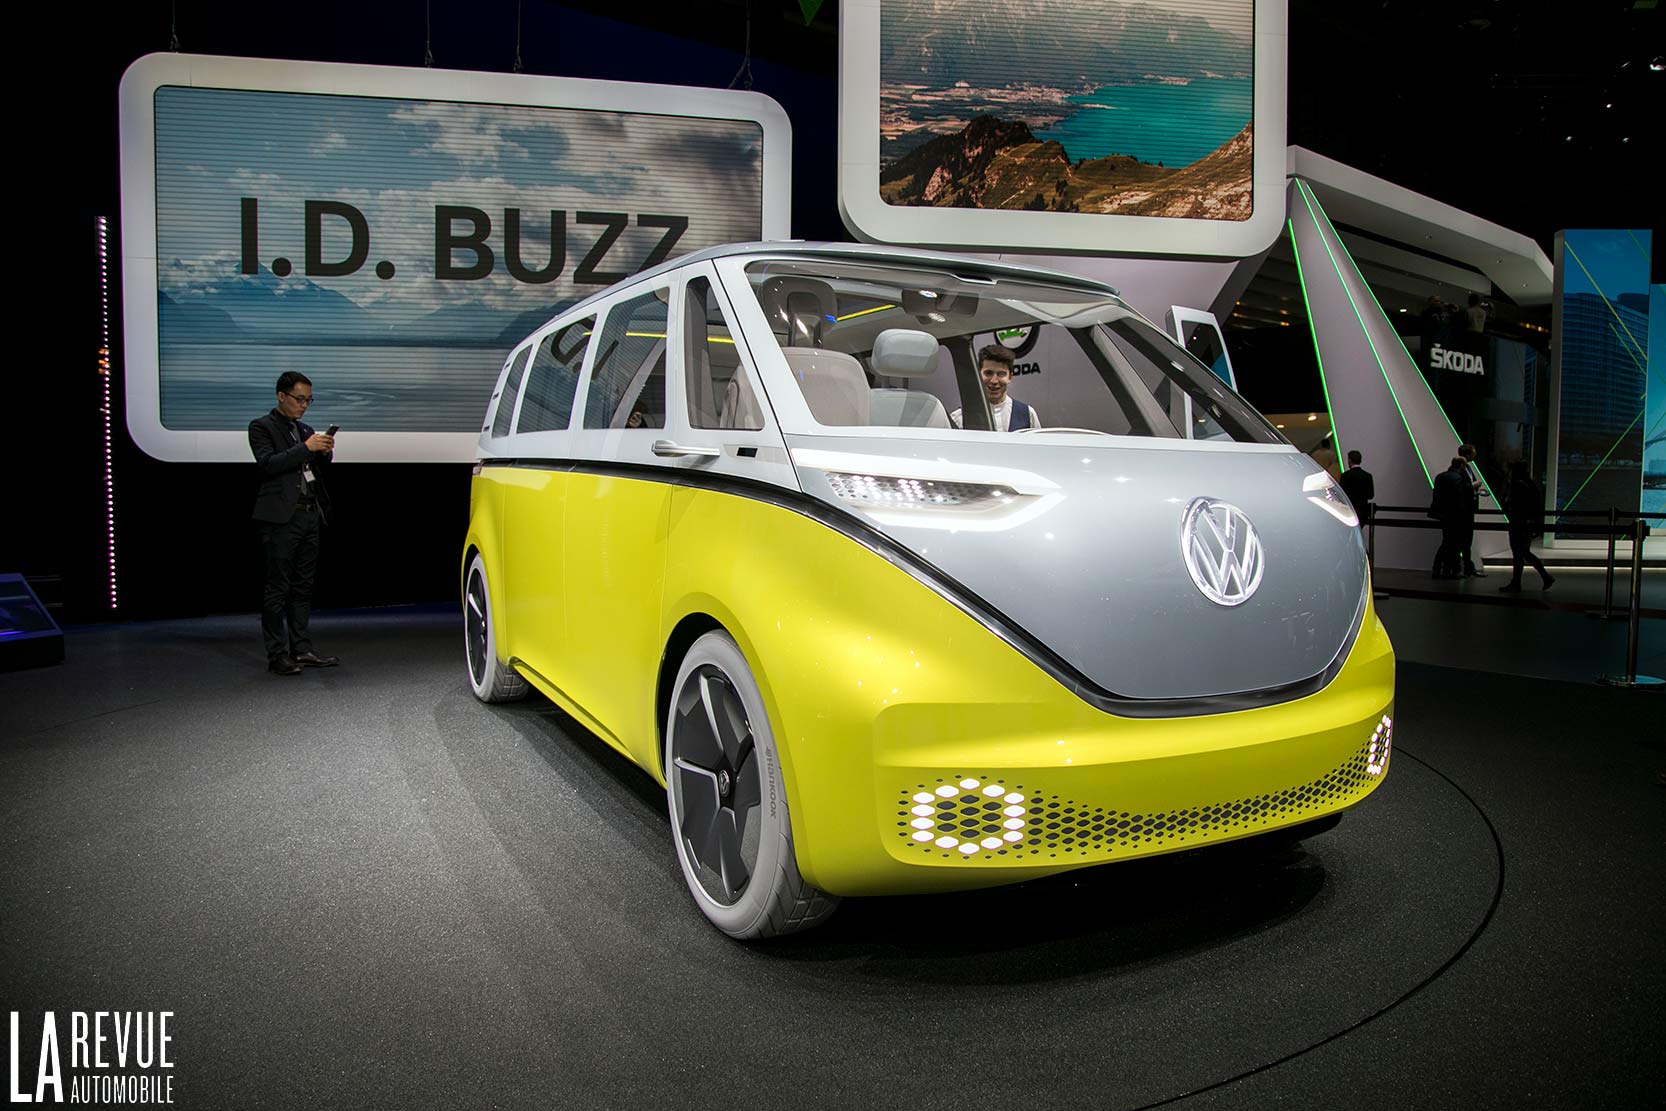 Image principale de l'actu: Volkswagen i d buzz notre avis 